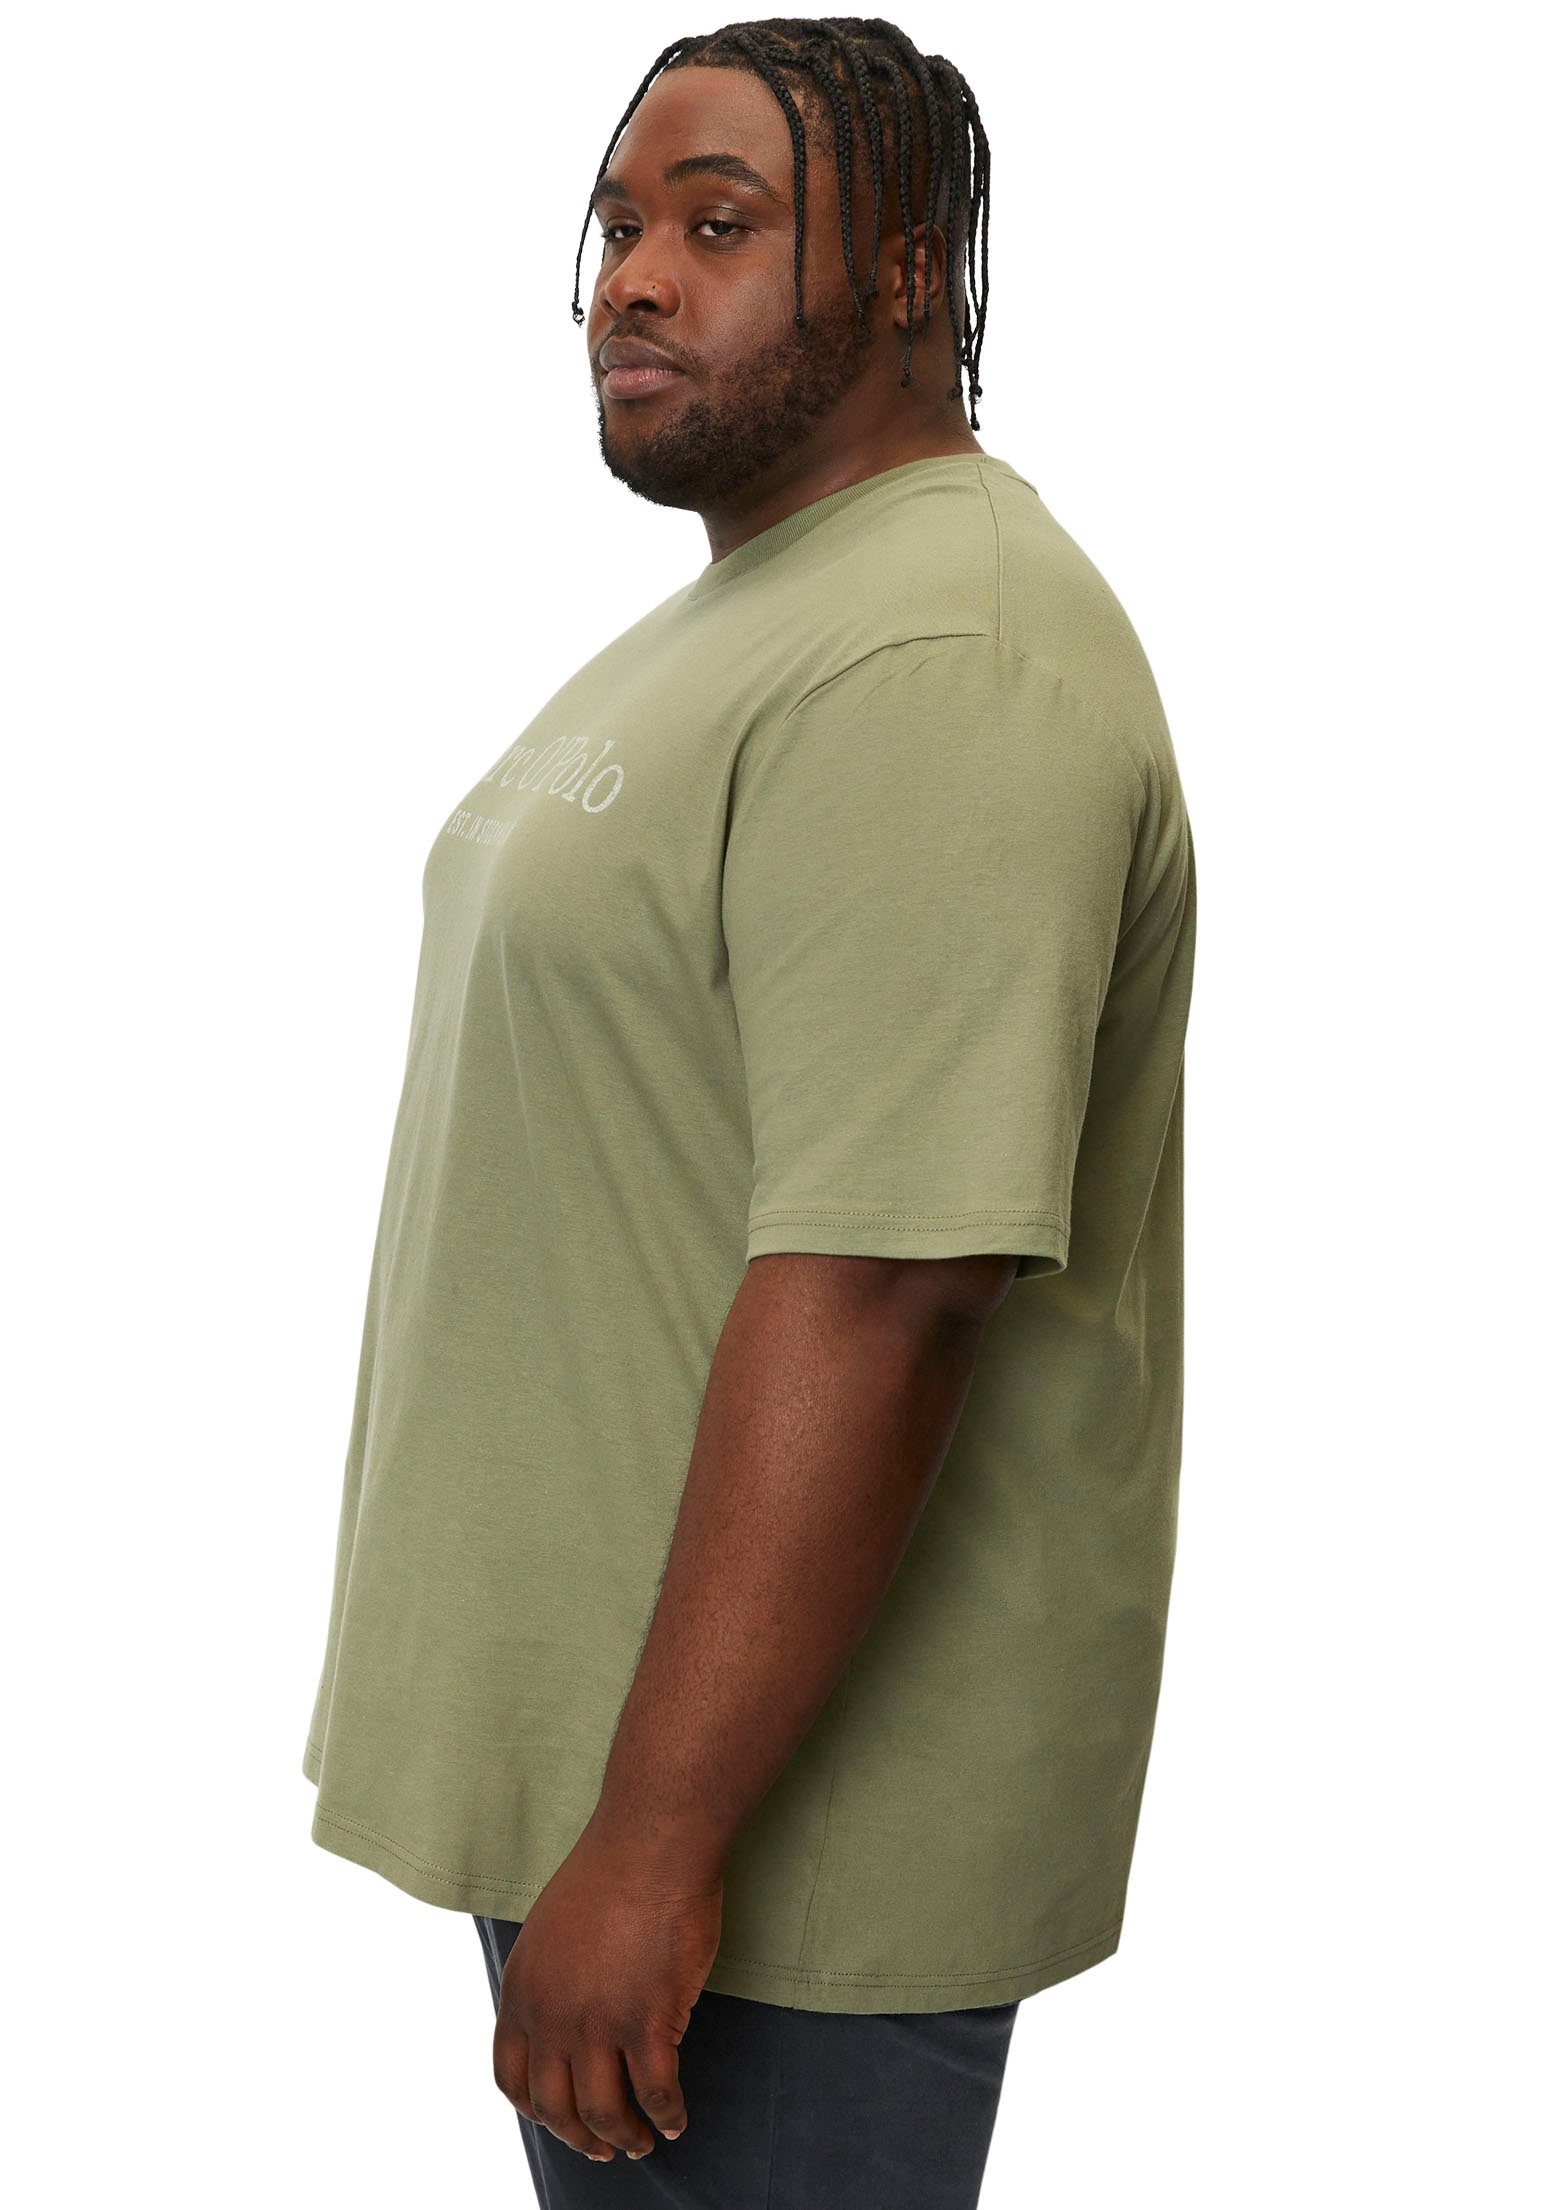 Big&Tall-Größen T-Shirt Marc in O'Polo olive